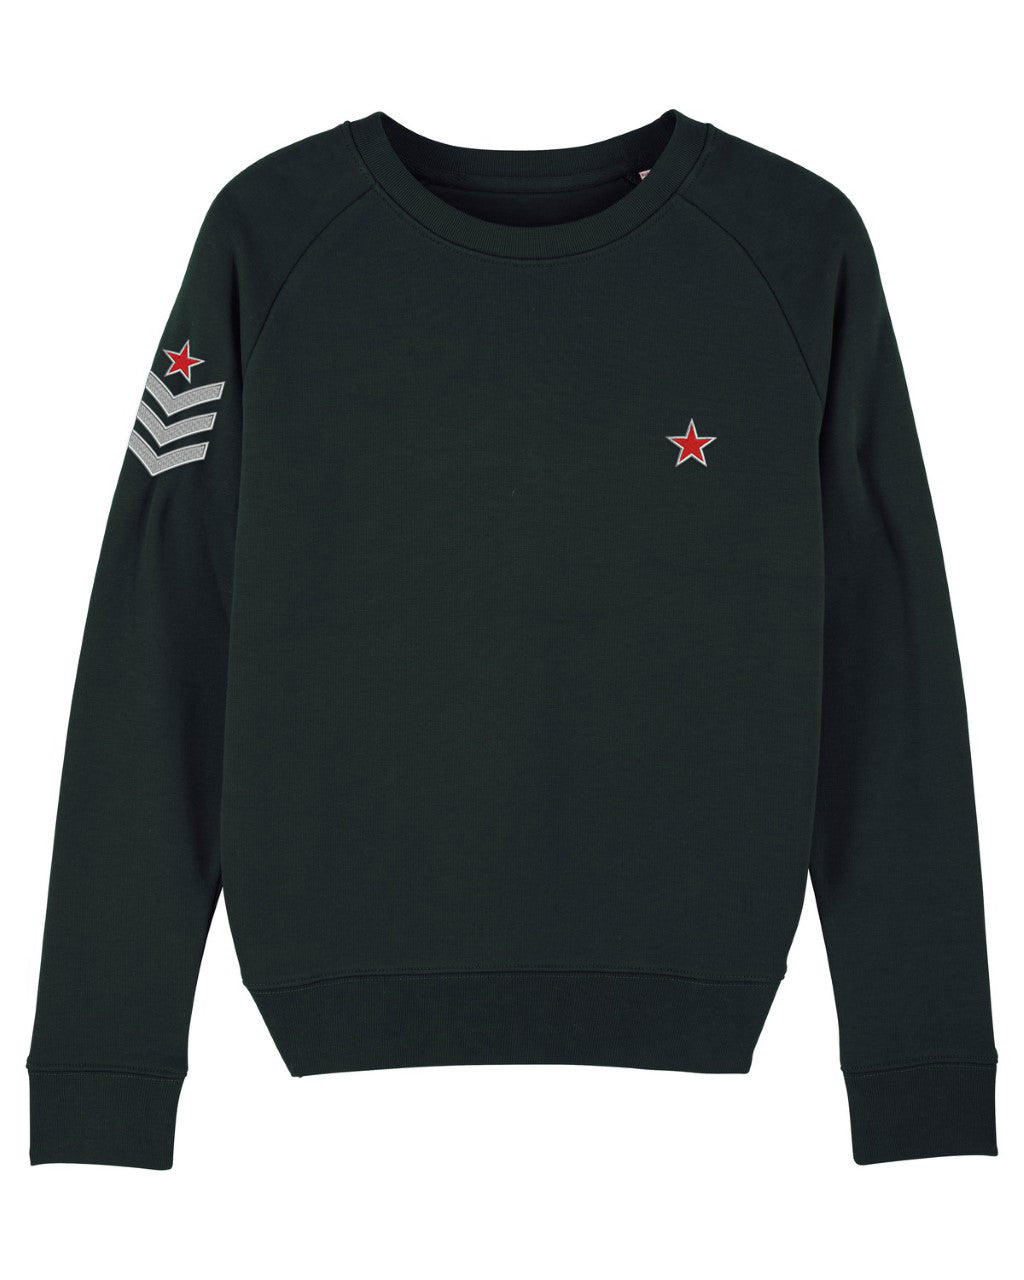 Black Military Sweatshirt - MADE TO ORDER